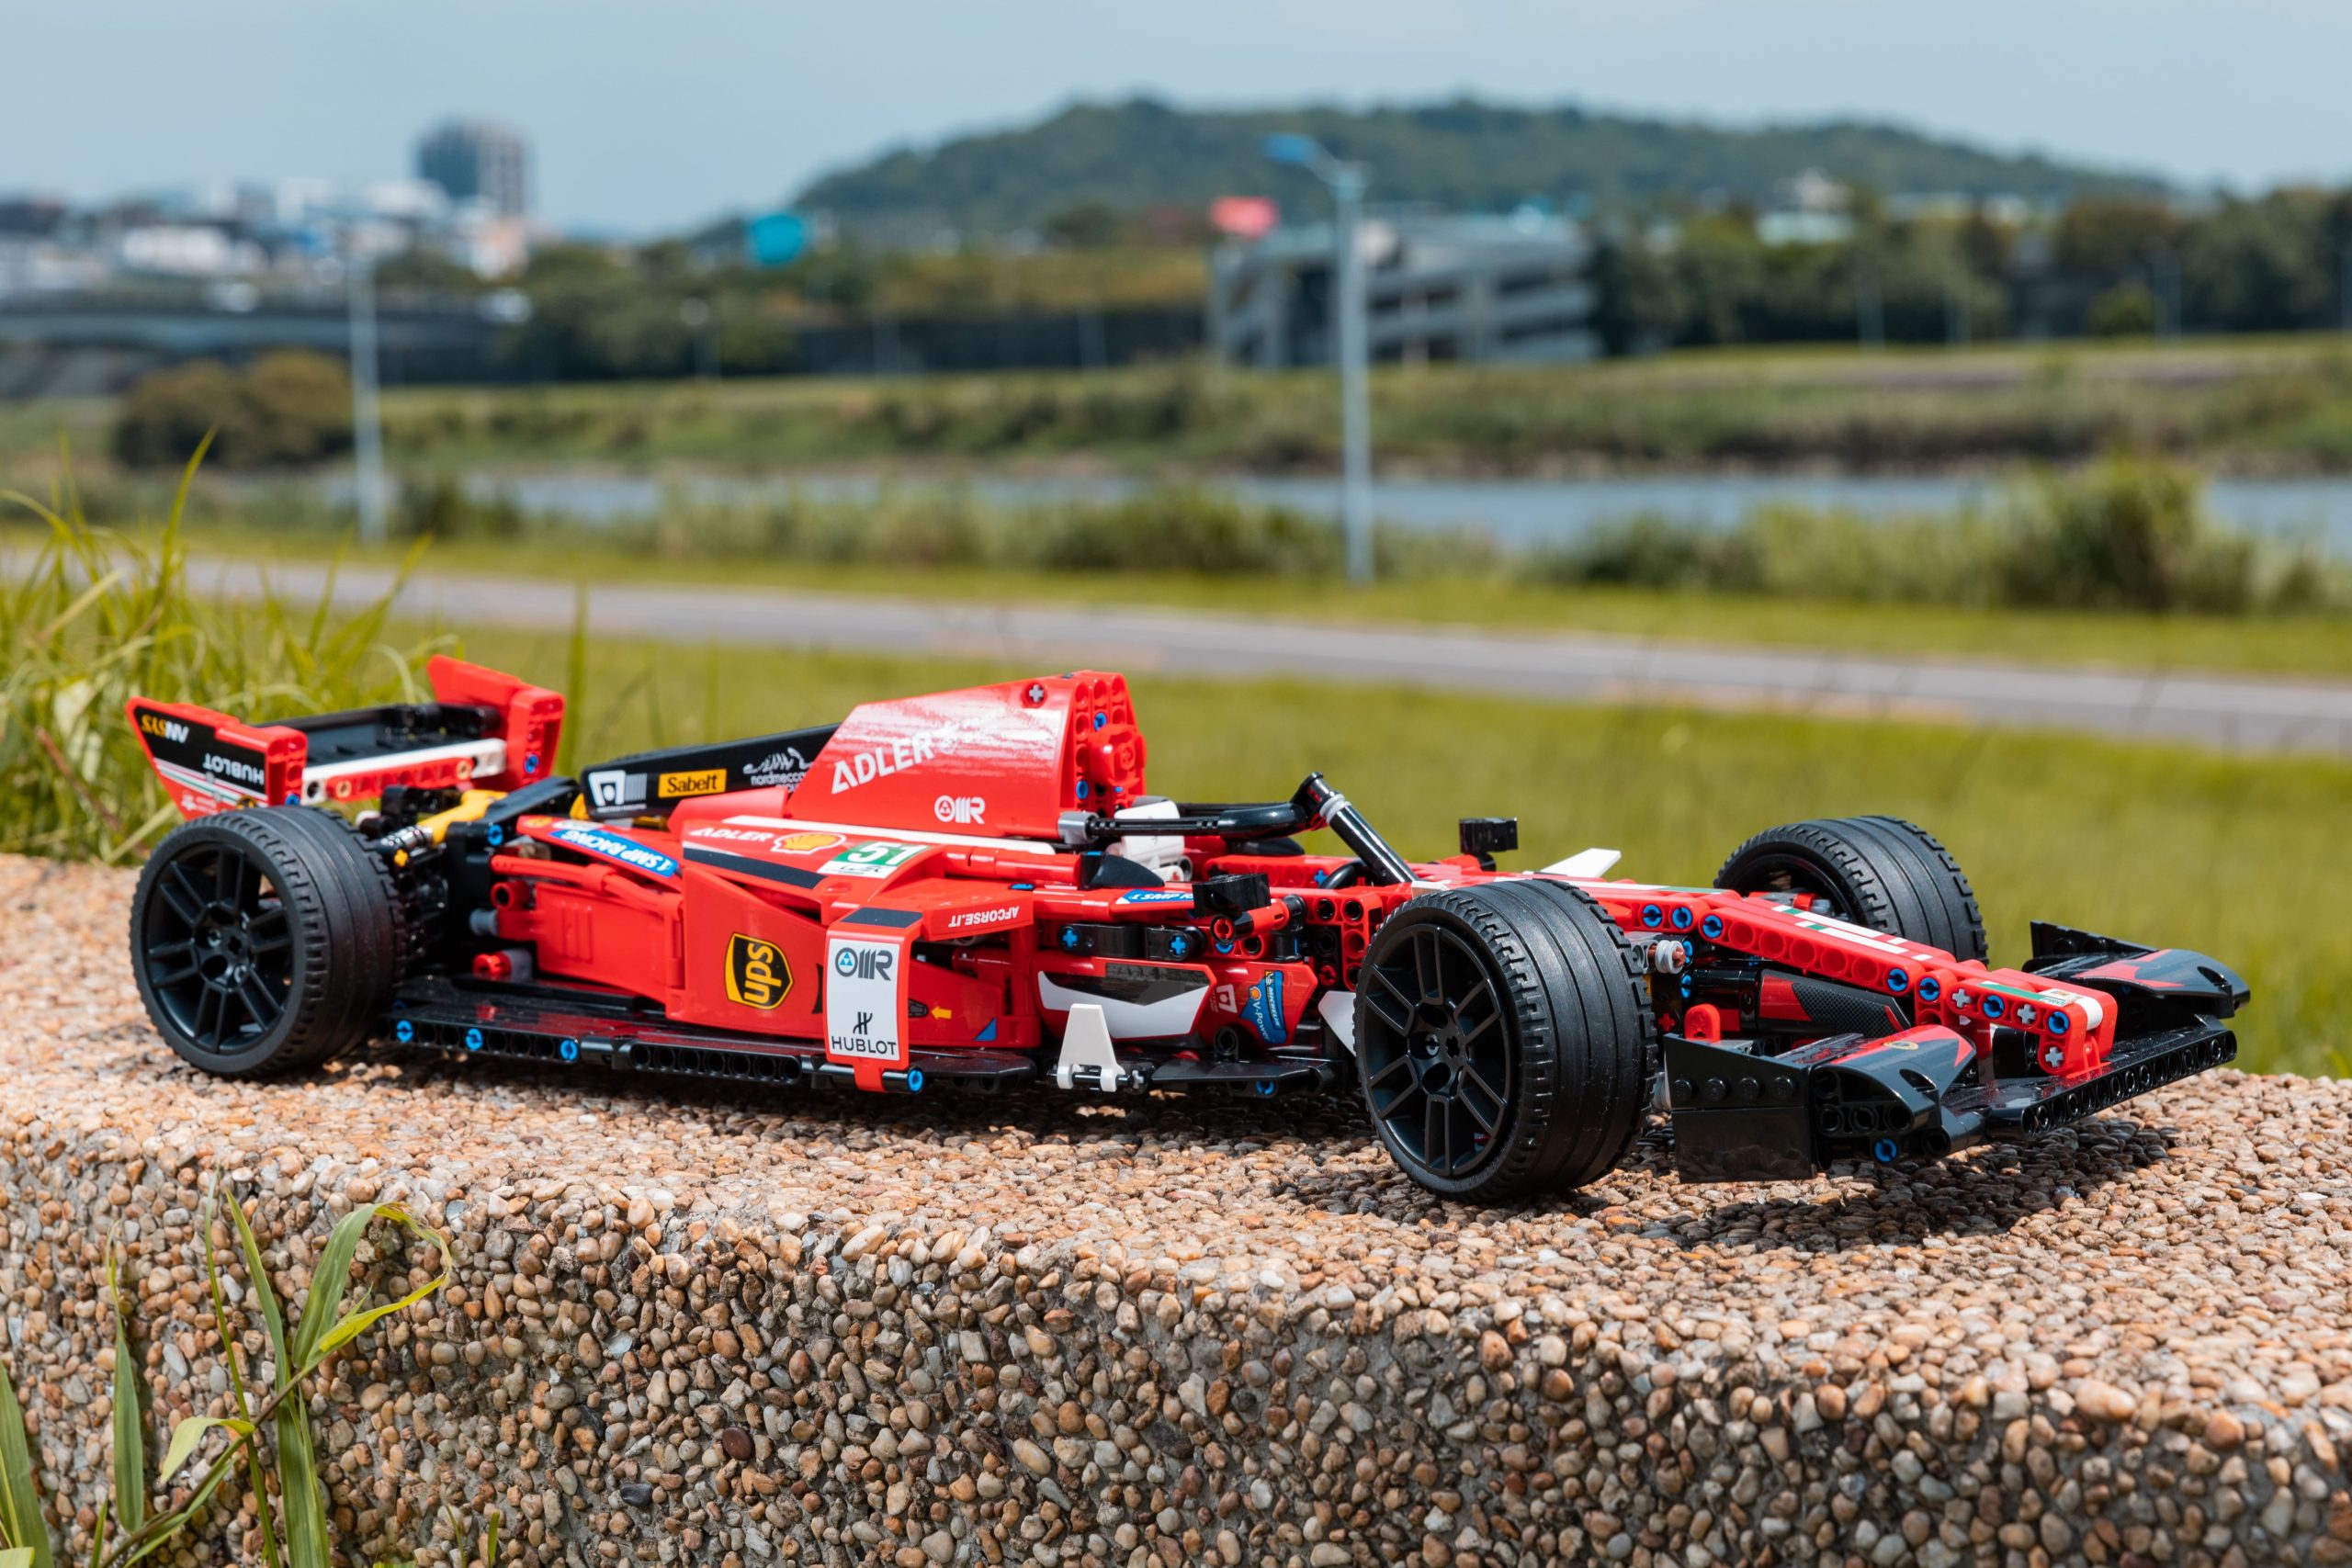 This Lego Creation Is a Perfect Replica of Ferrari's 2016 F1 Car